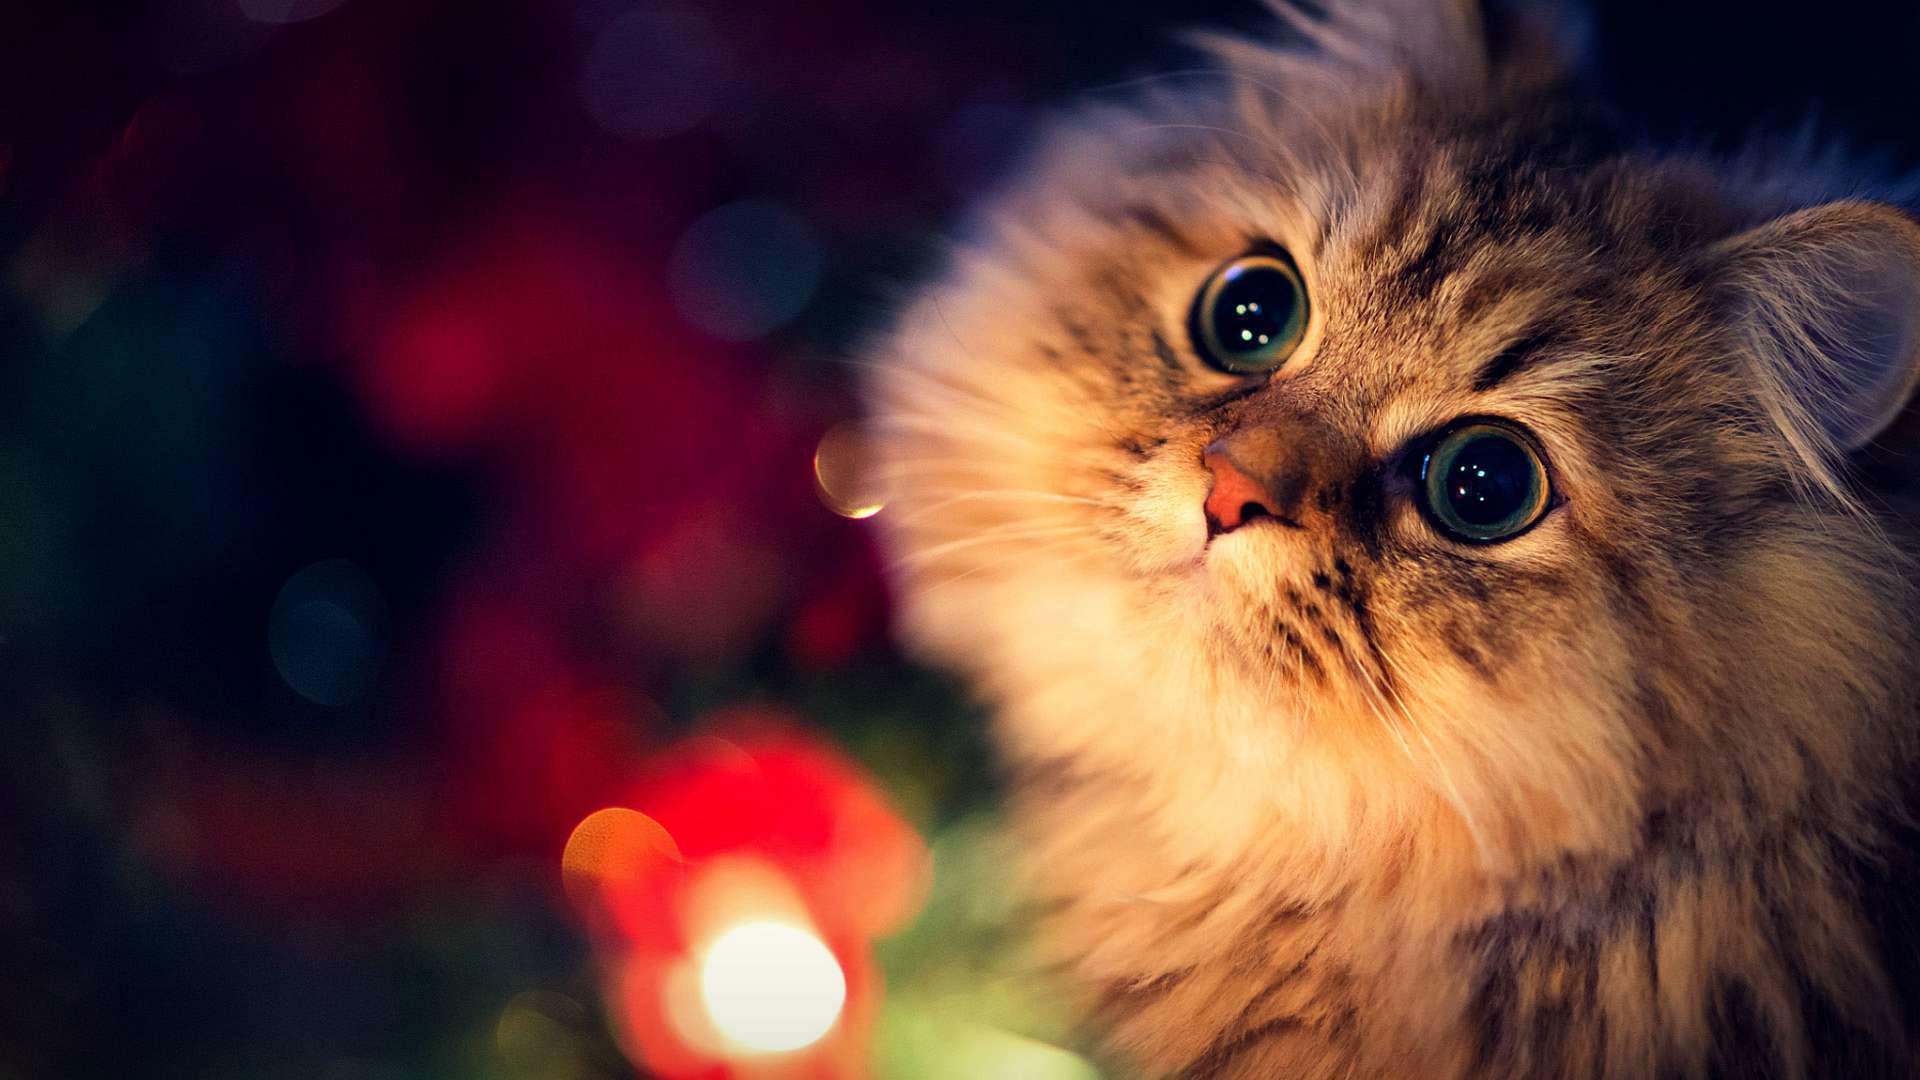 Cute Christmas Cat Desktop Wallpapers - Top Free Cute Christmas ...